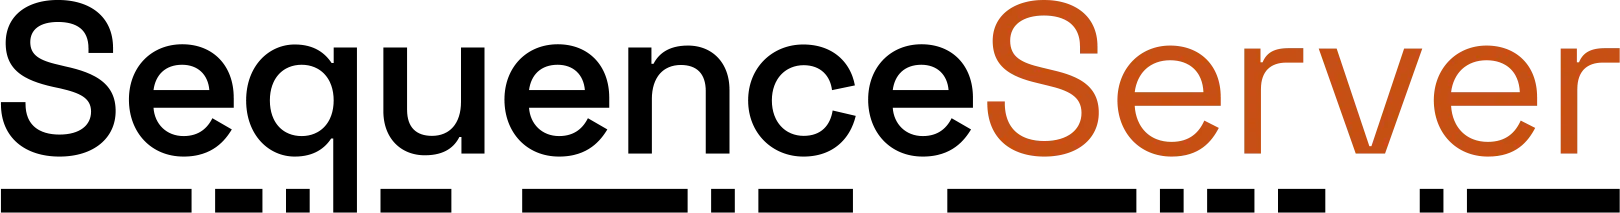 sequenceserver_logo